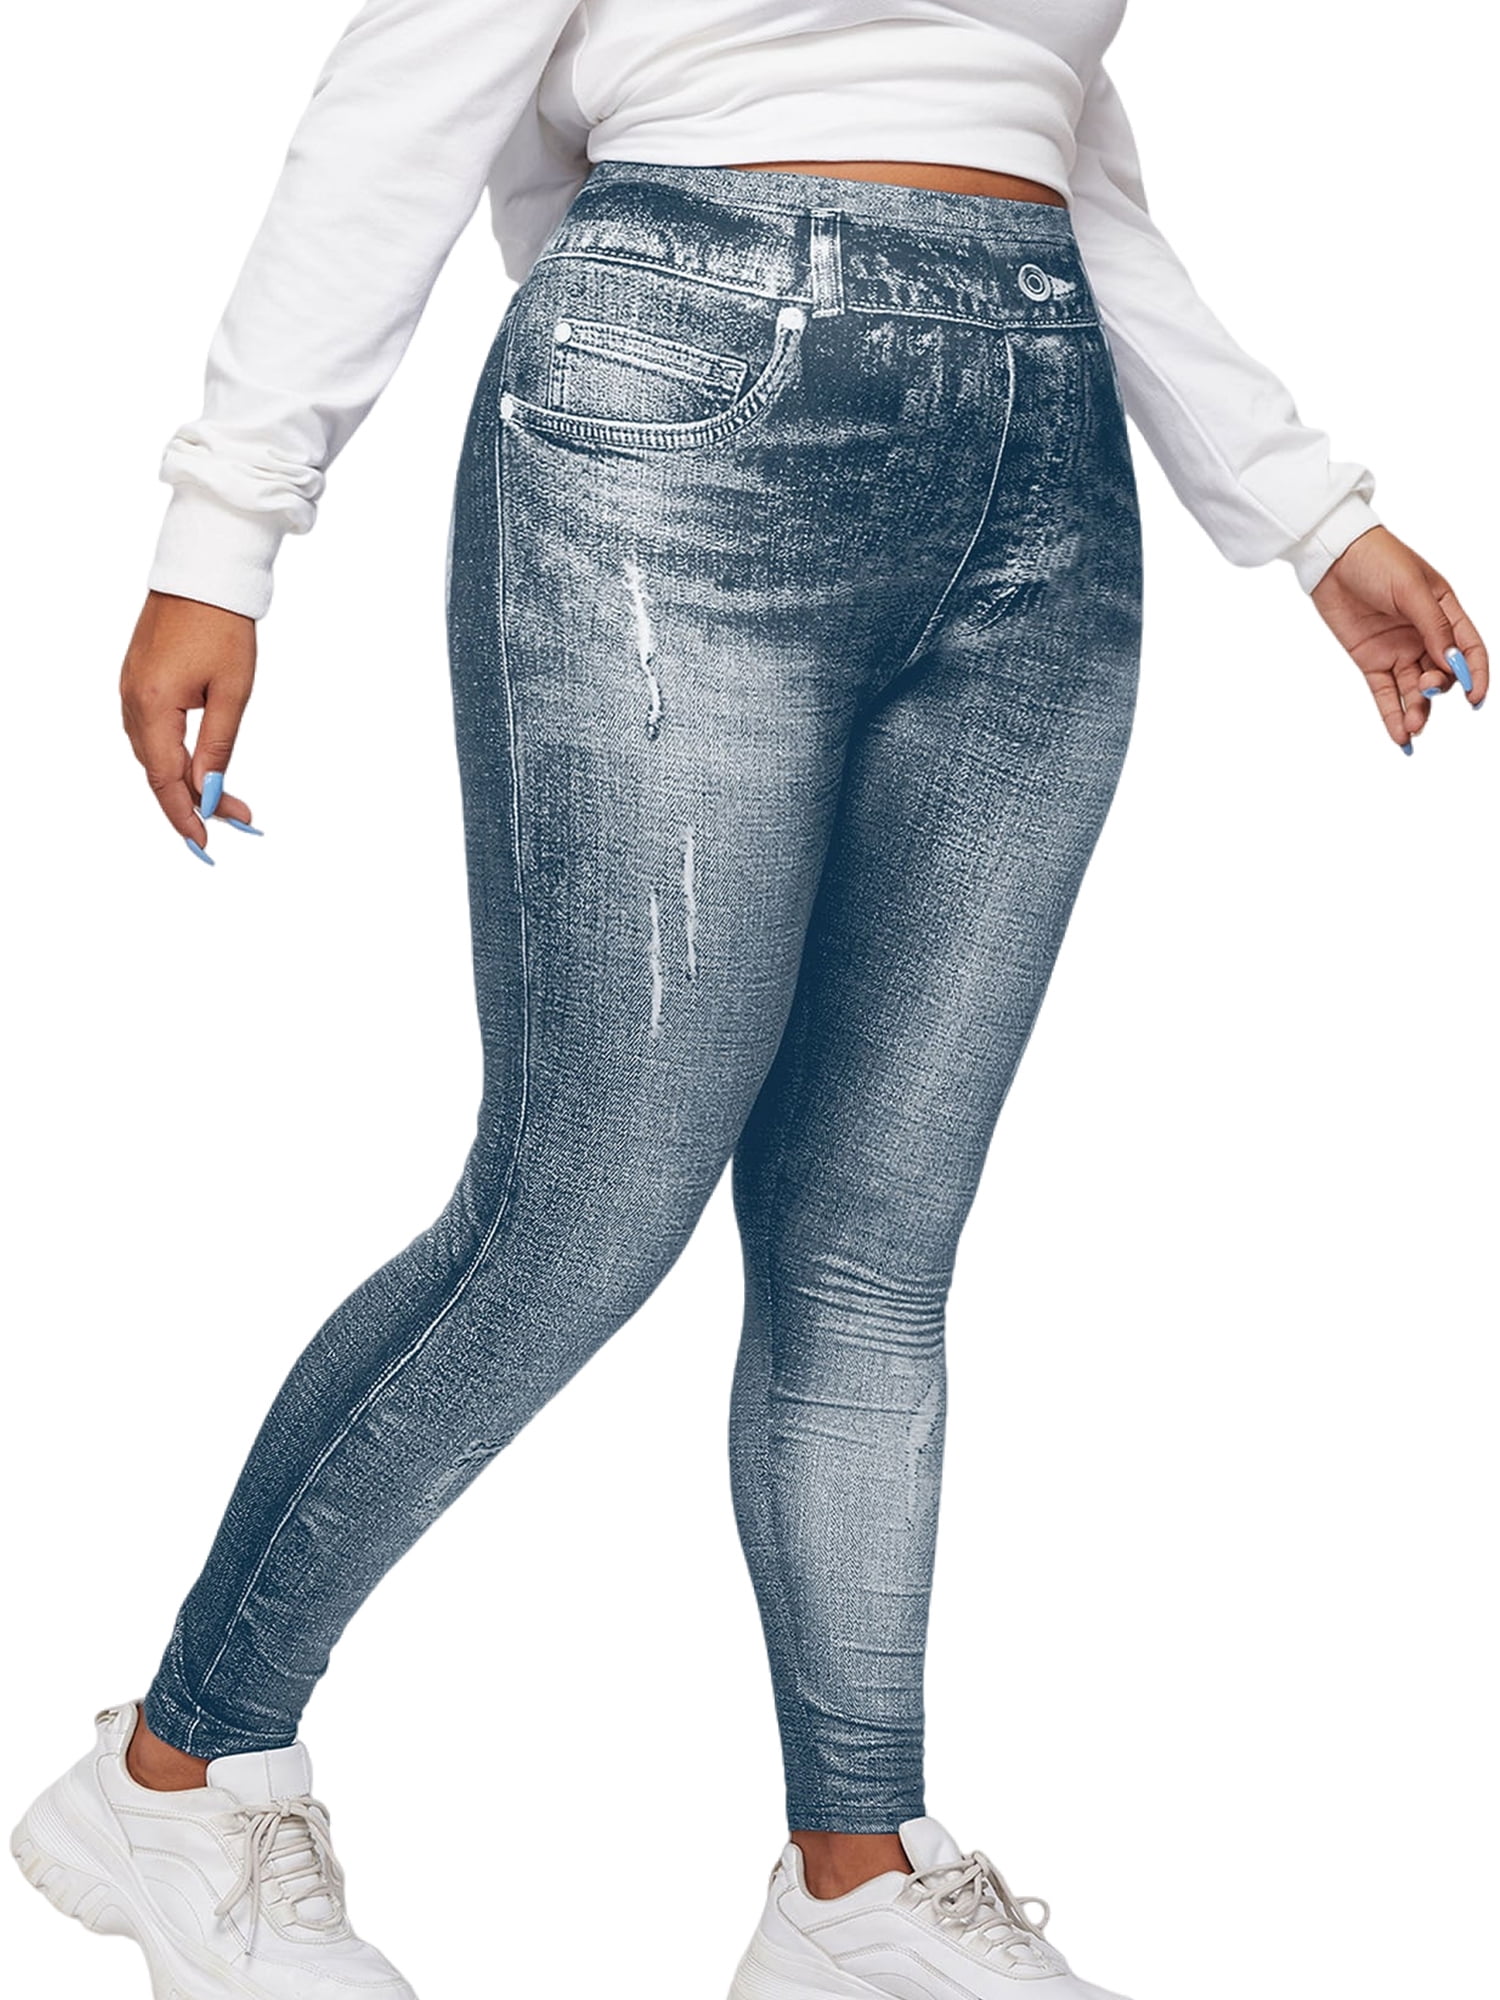 XL-5XL Women Elastic Waist Plus Size Jeggings Jeans Leggings